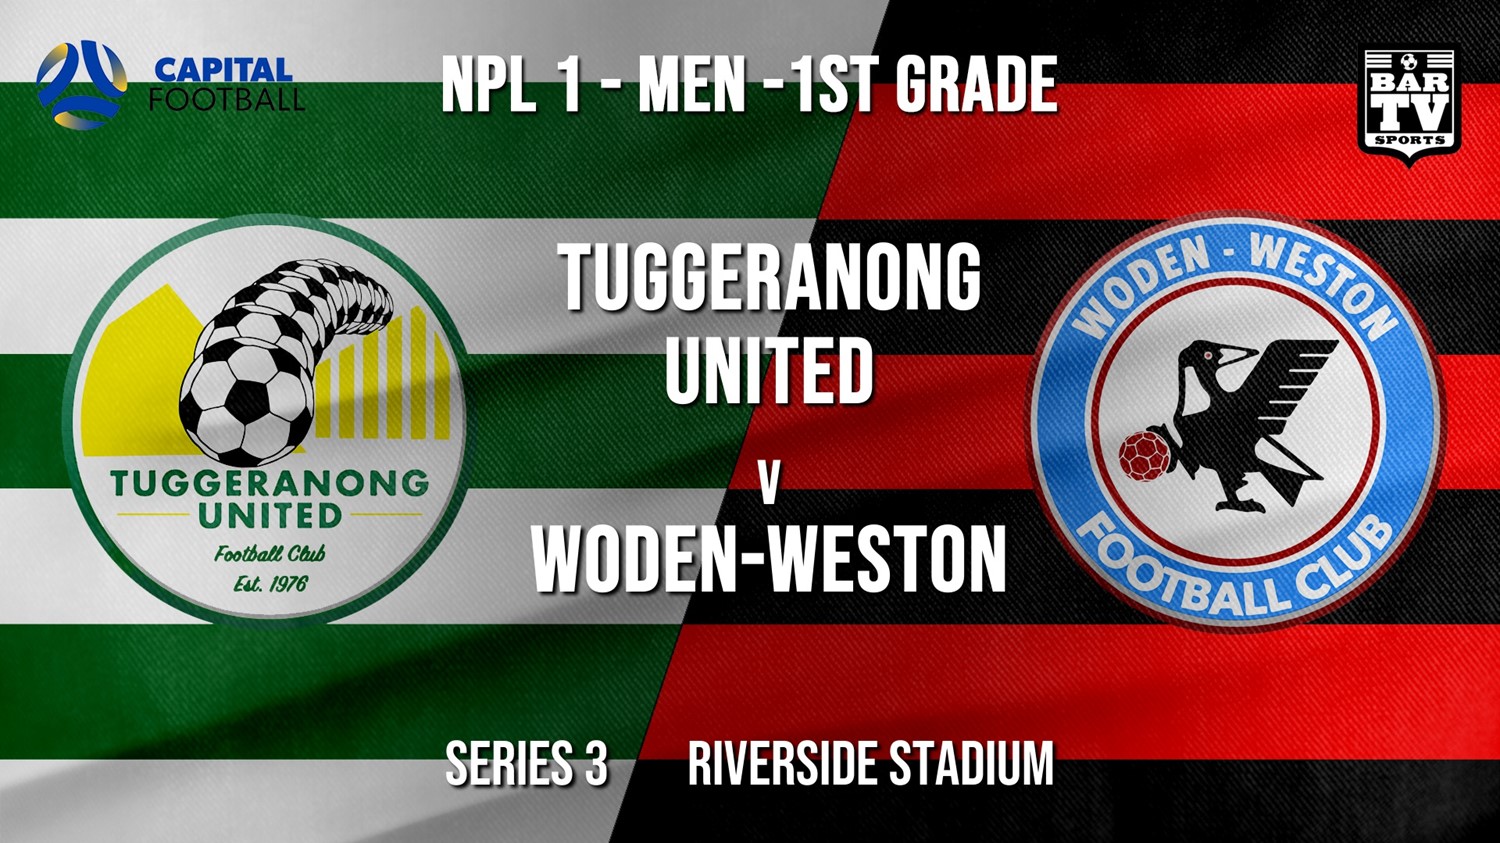 NPL - CAPITAL Series 3 - Tuggeranong United FC v Woden-Weston FC Minigame Slate Image